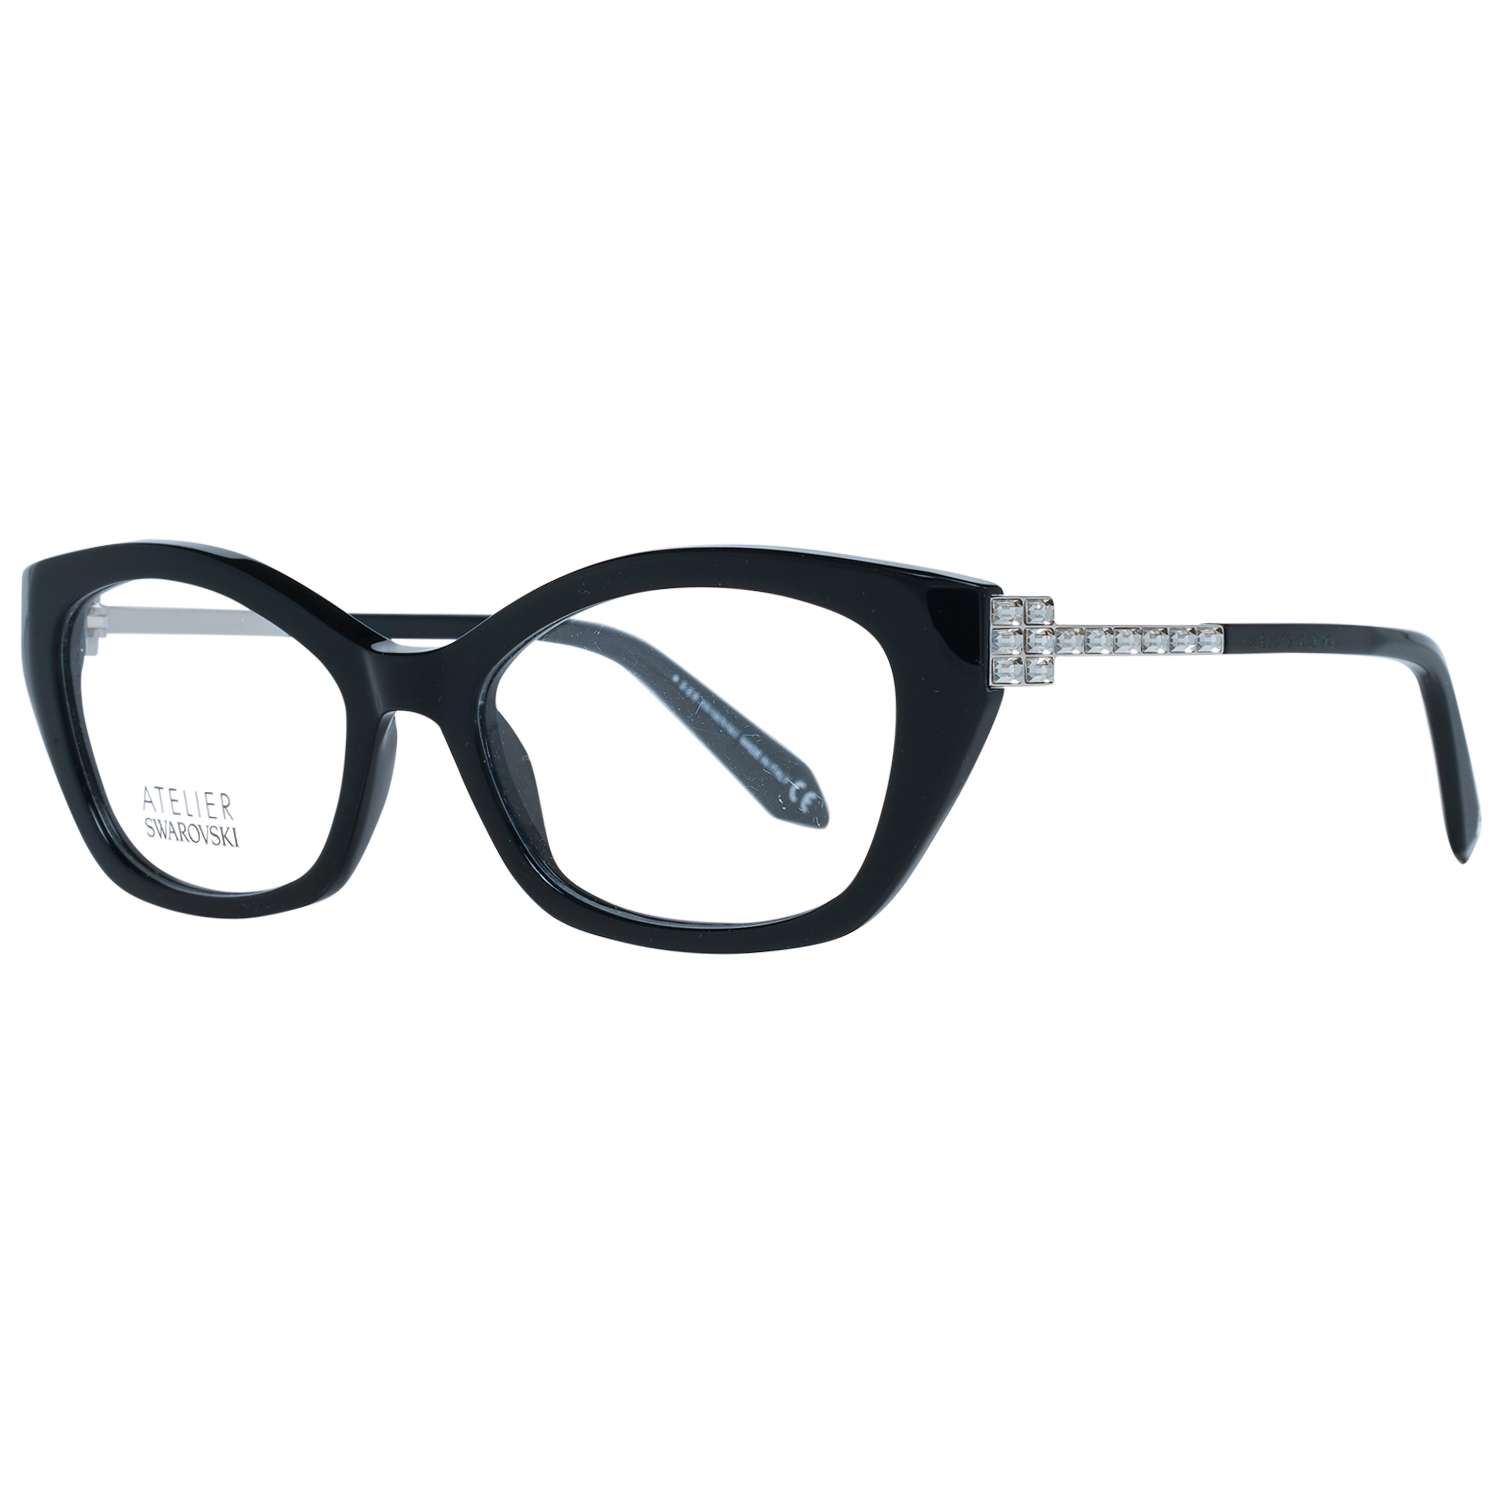 Atelier Swarovski Frames Atelier Swarovski Glasses Optical Frame SK5361-P 001 Eyeglasses Eyewear UK USA Australia 